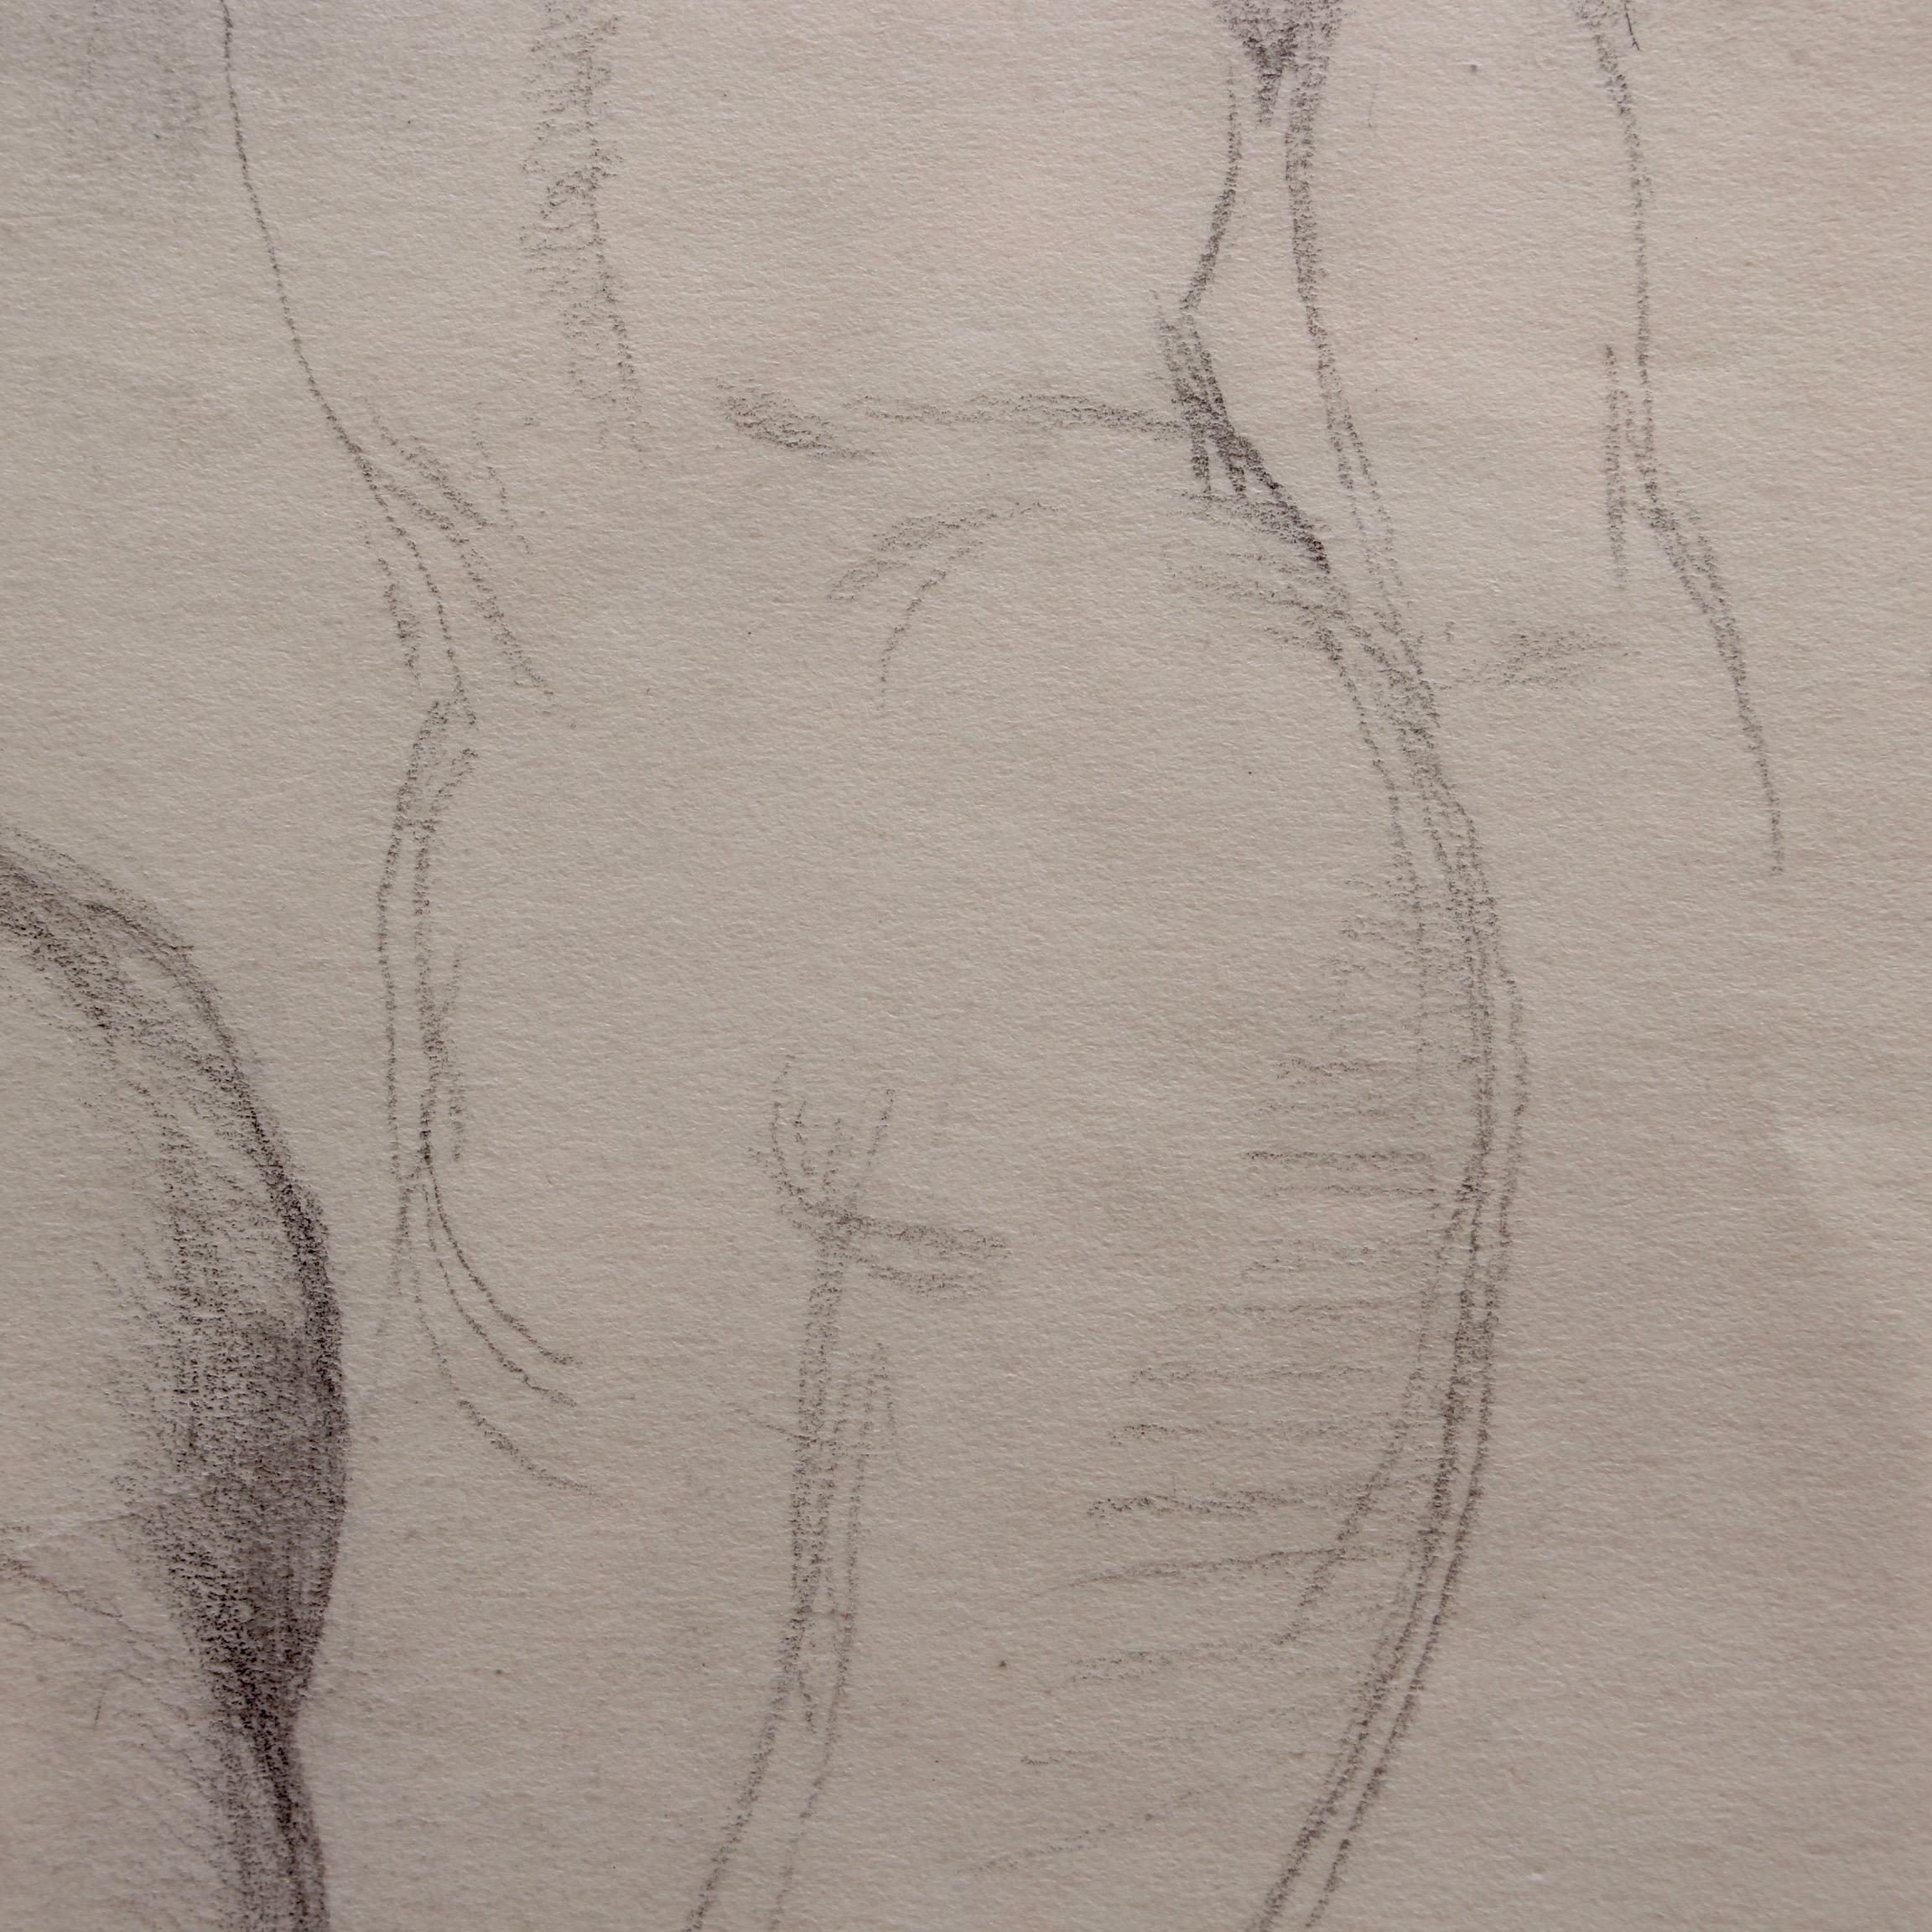 Male Nude Pencil Drawing by Bernard Sleigh RBSA (circa 1900-1920) For Sale 4